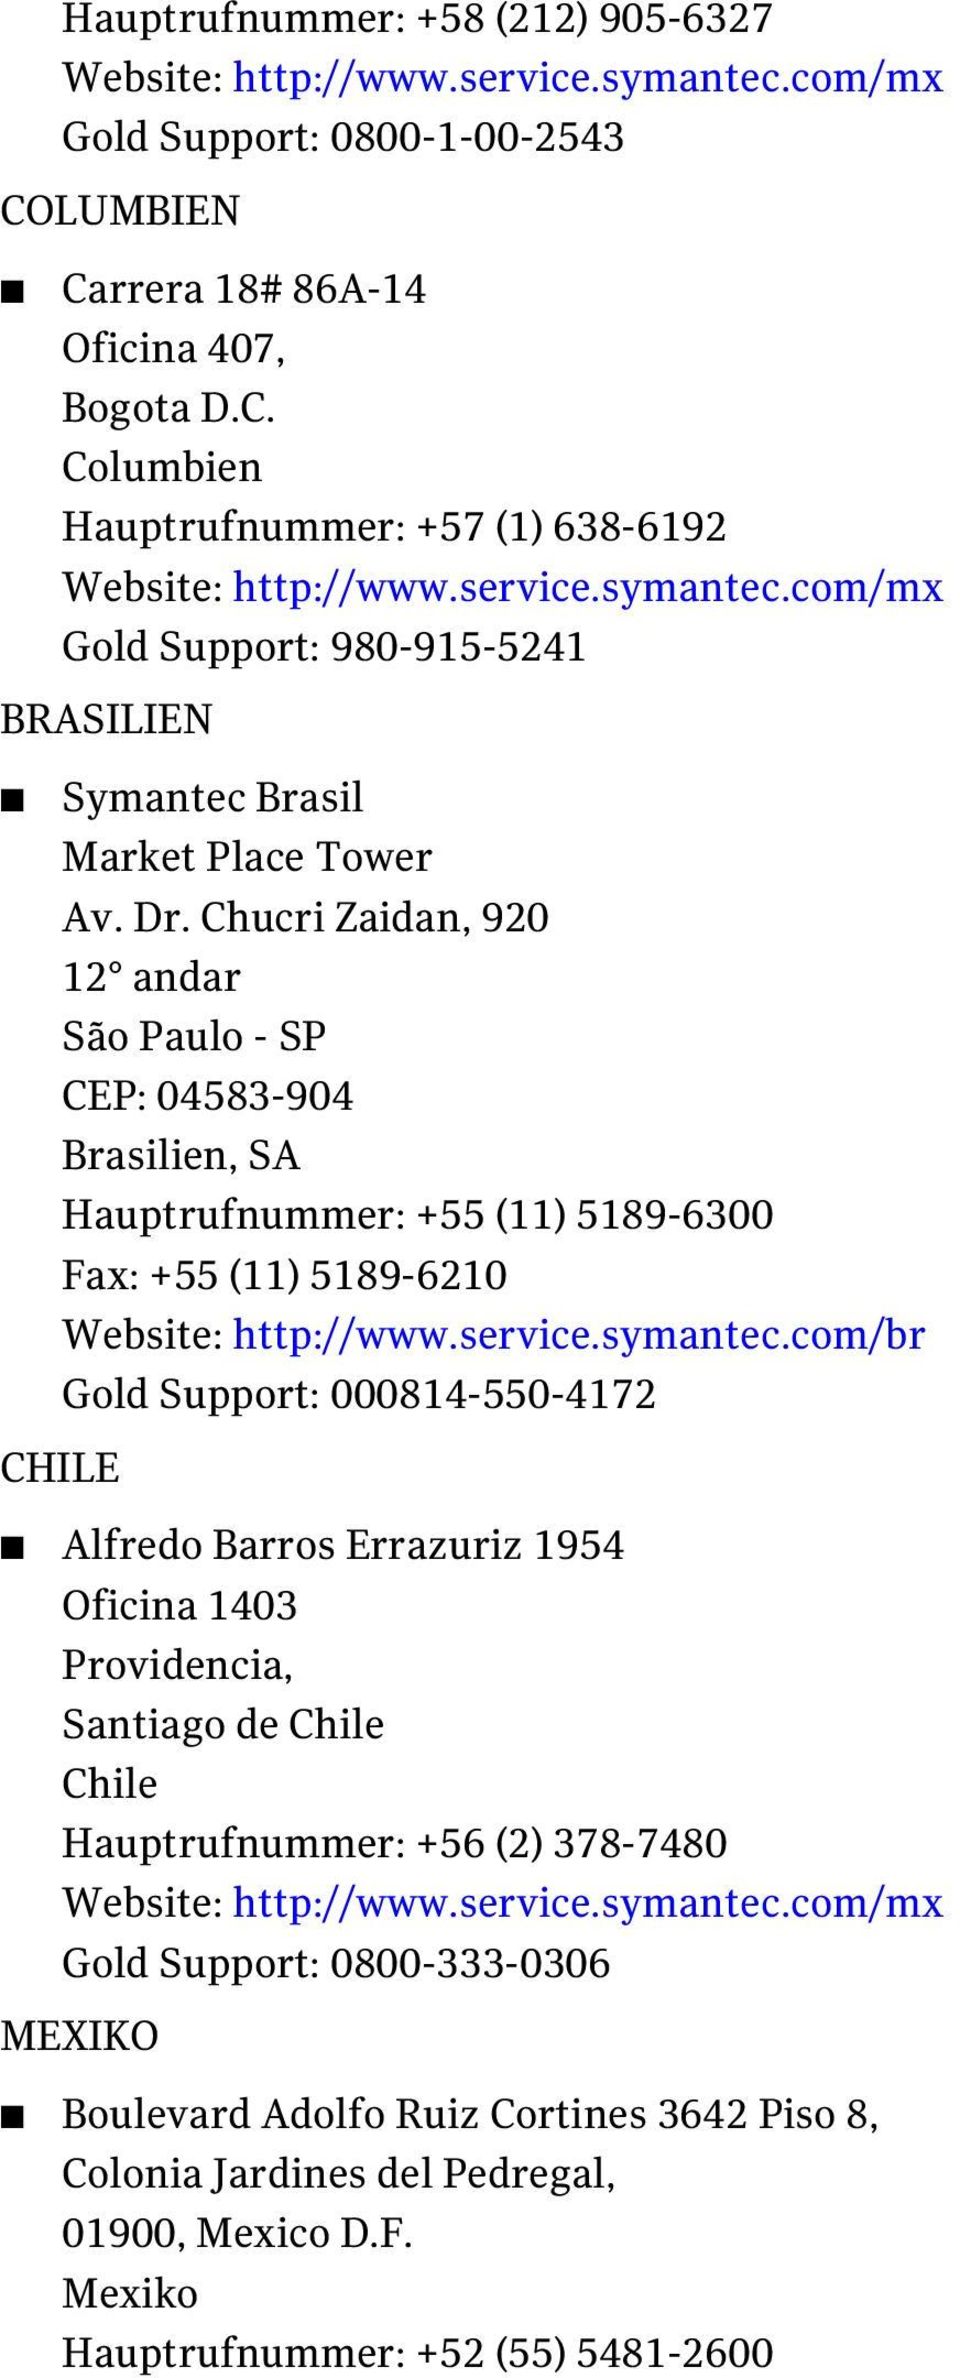 Chucri Zaidan, 920 12 andar São Paulo - SP CEP: 04583-904 Brasilien, SA Hauptrufnummer: +55 (11) 5189-6300 Fax: +55 (11) 5189-6210 Website: http://www.service.symantec.